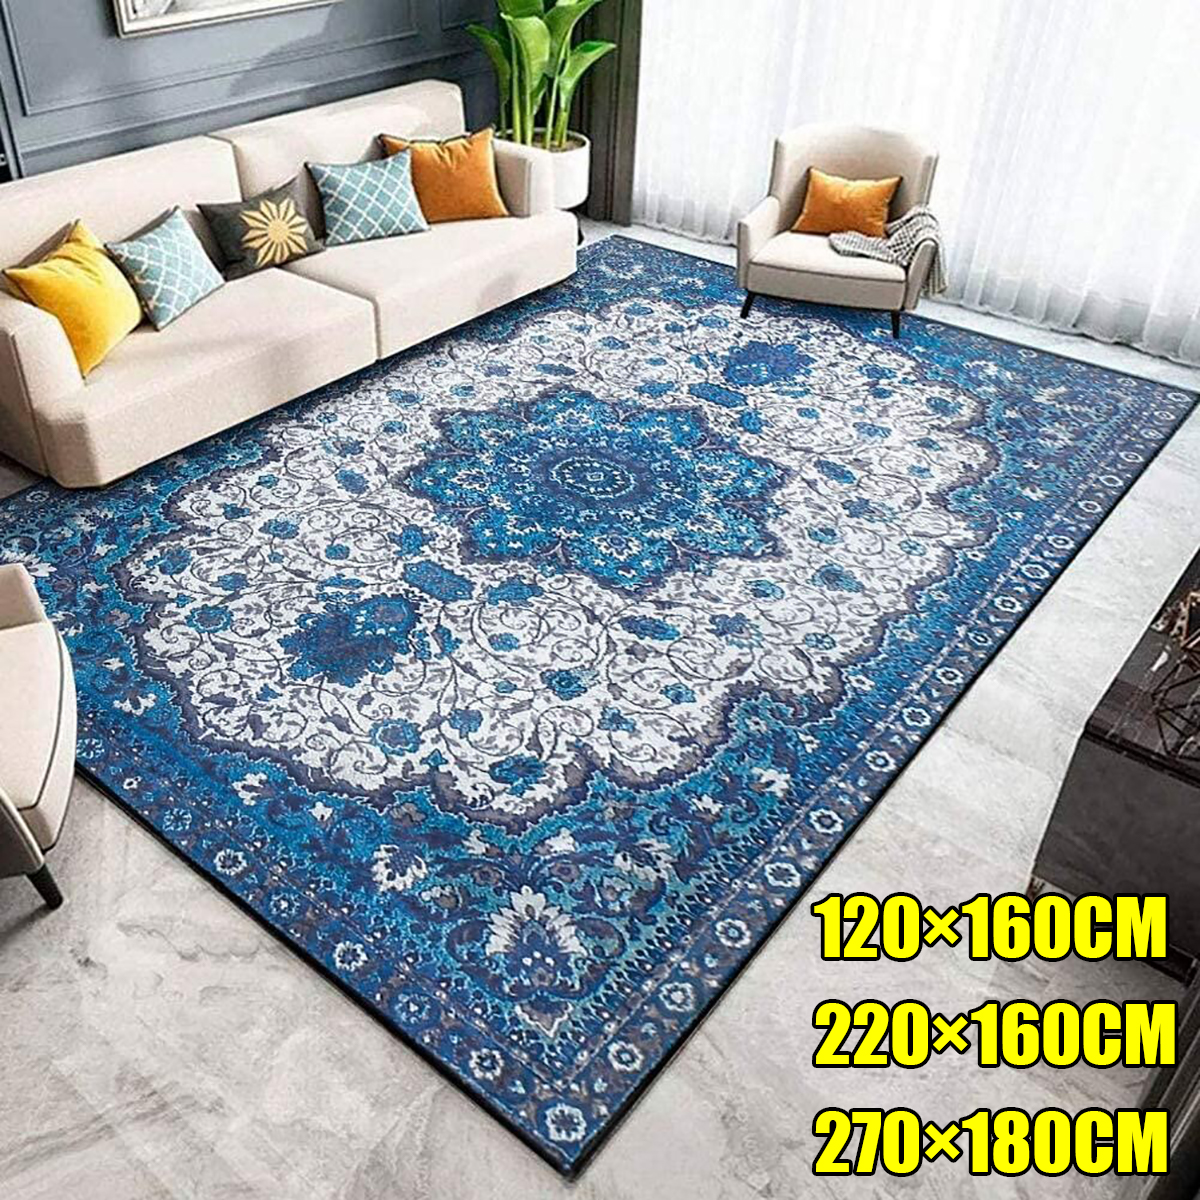 Premium-Large-Floor-Rug-Navy-Blue-Super-Soft-Print-Traditional-Persian-Carpet-1878868-1